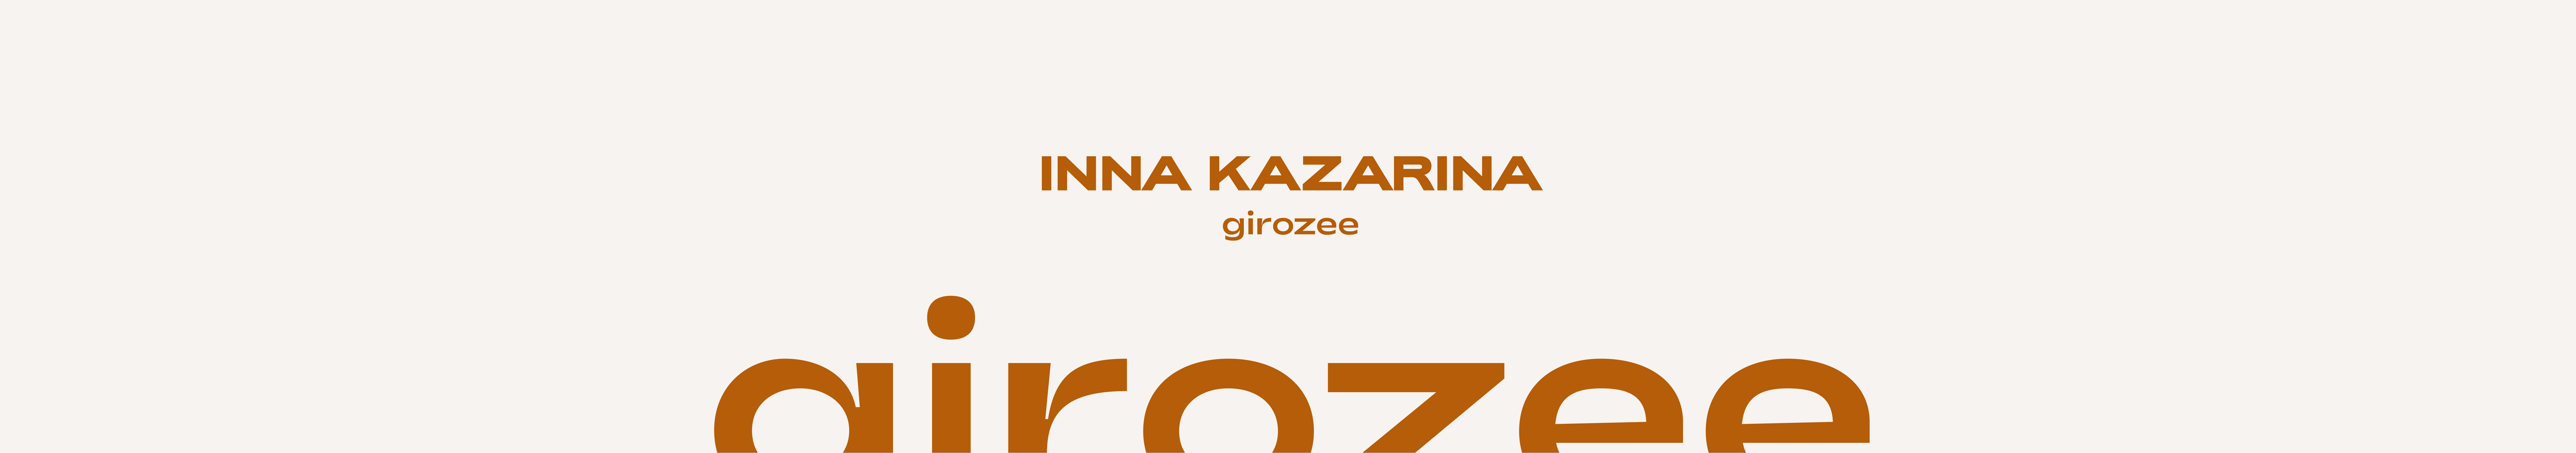 Inna Kazarina's profile banner